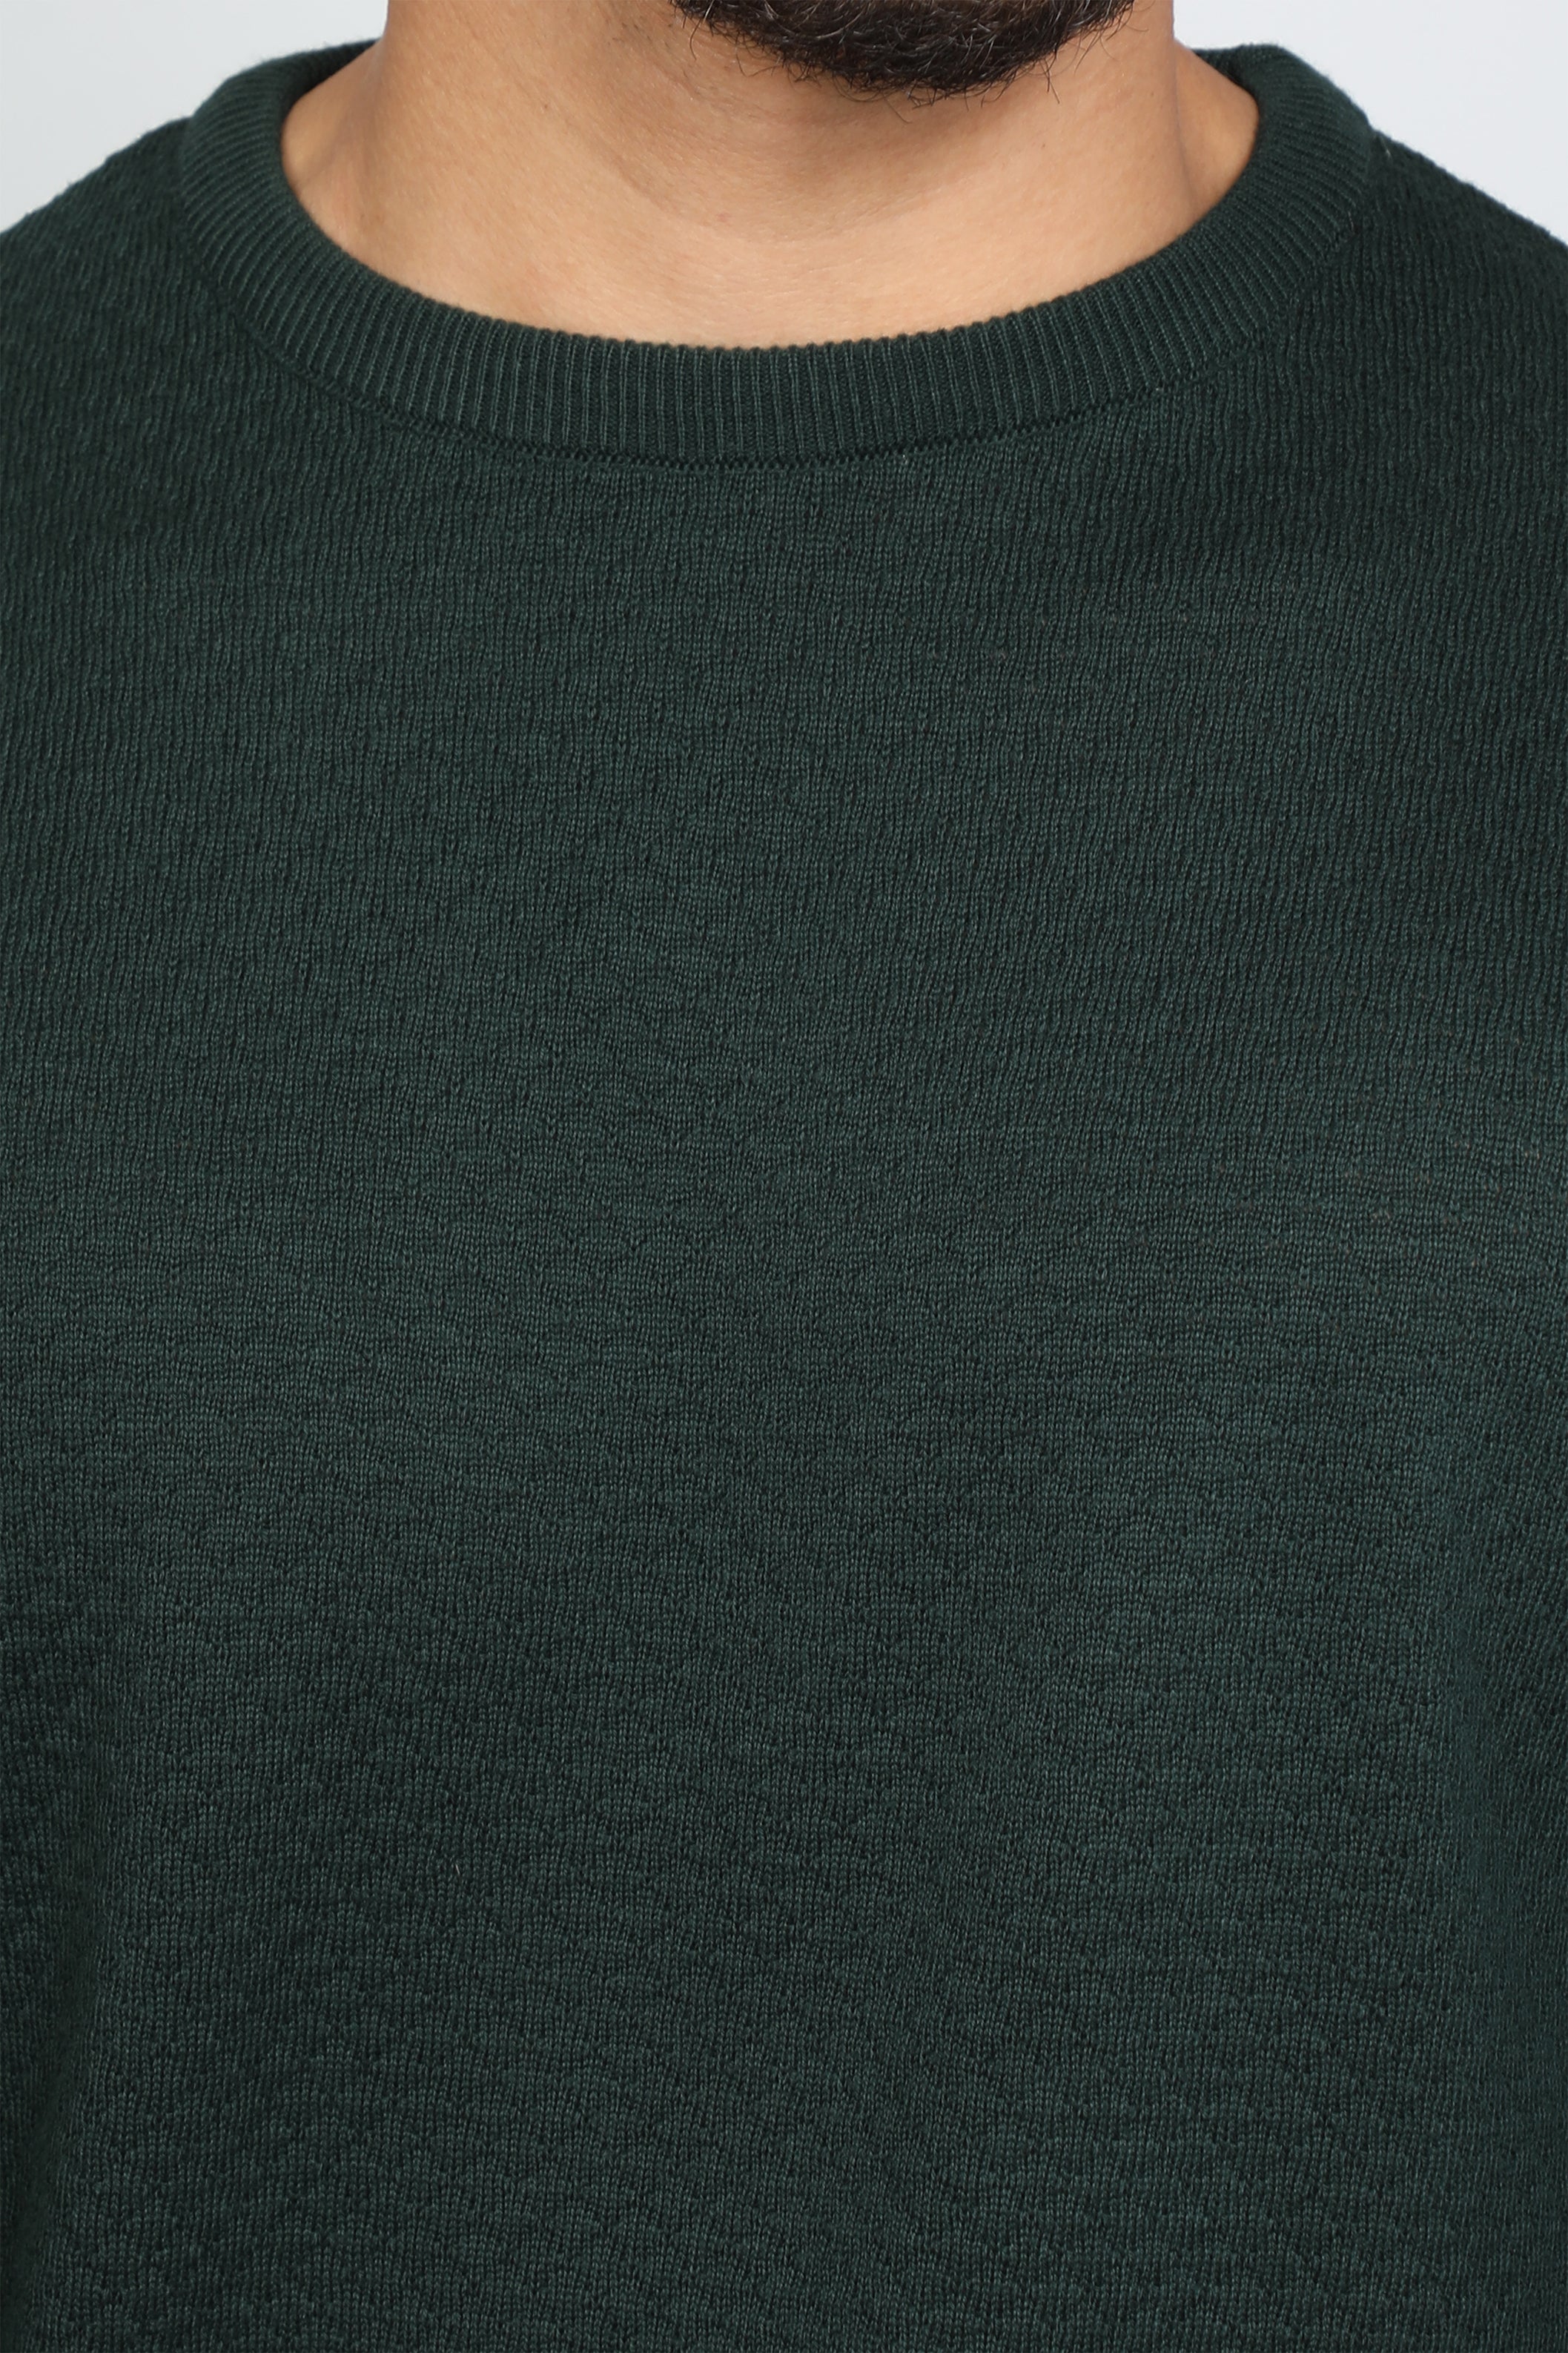 Men Classy Slim Dark Green Sweater